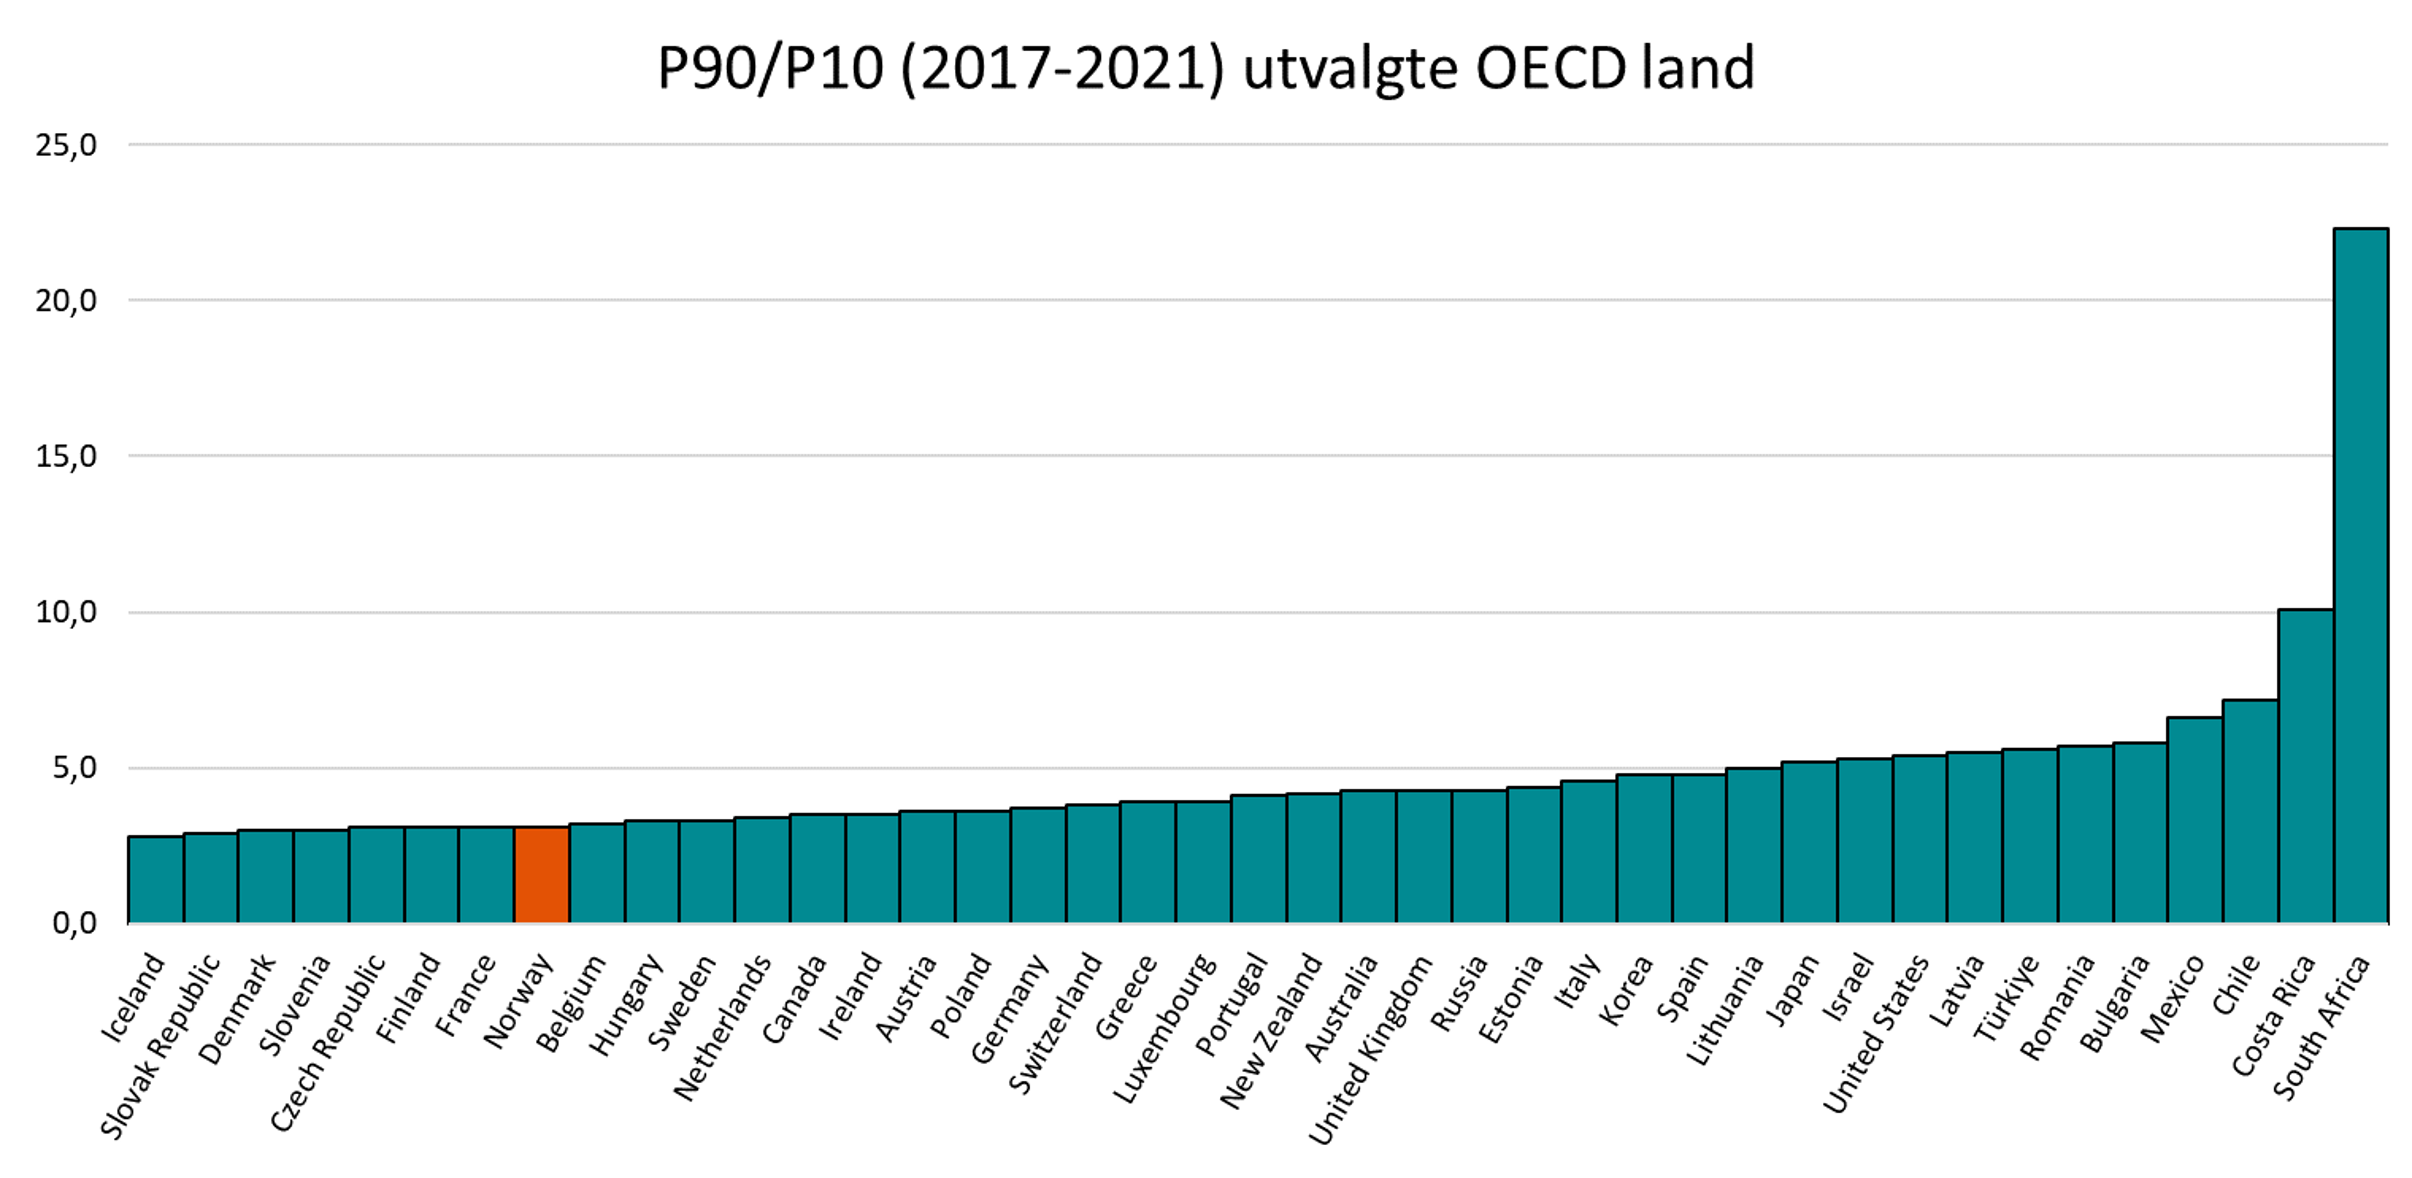 P90/P10 (2017-2021) utvalgte OECD land 